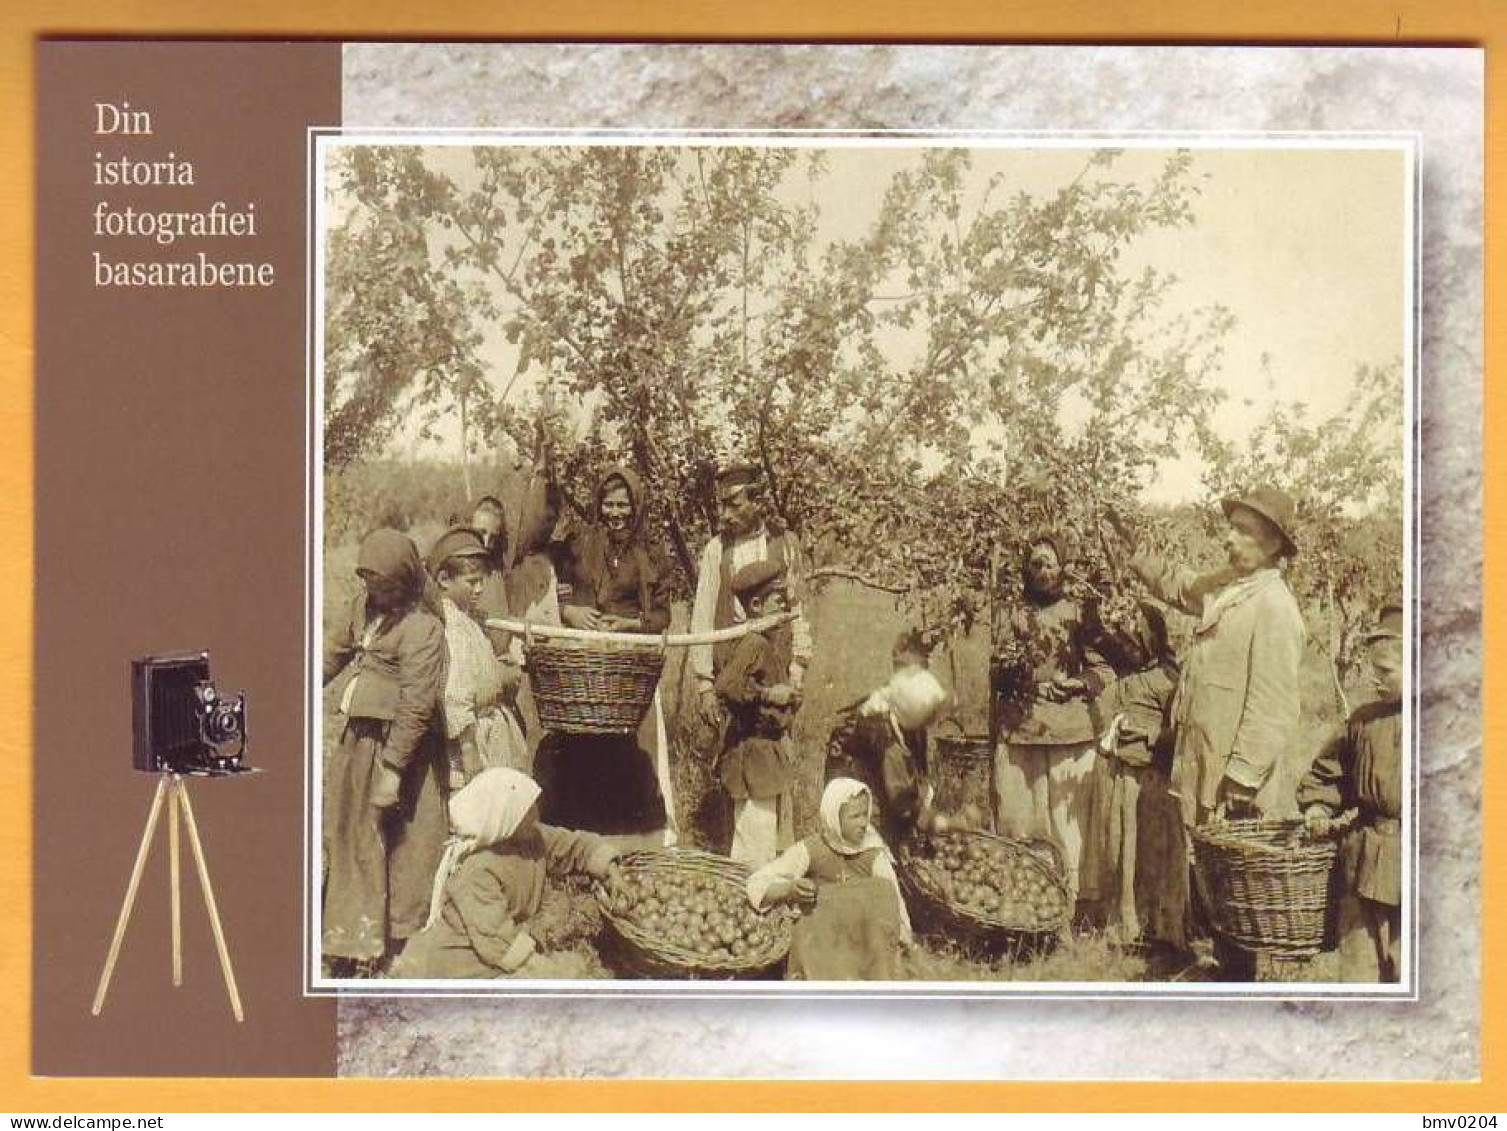 2014 Moldova  Postcard. Fruit Collection. The Village Of Speia. Basarabia. Osterman. The Museum. Apples. - Moldavia